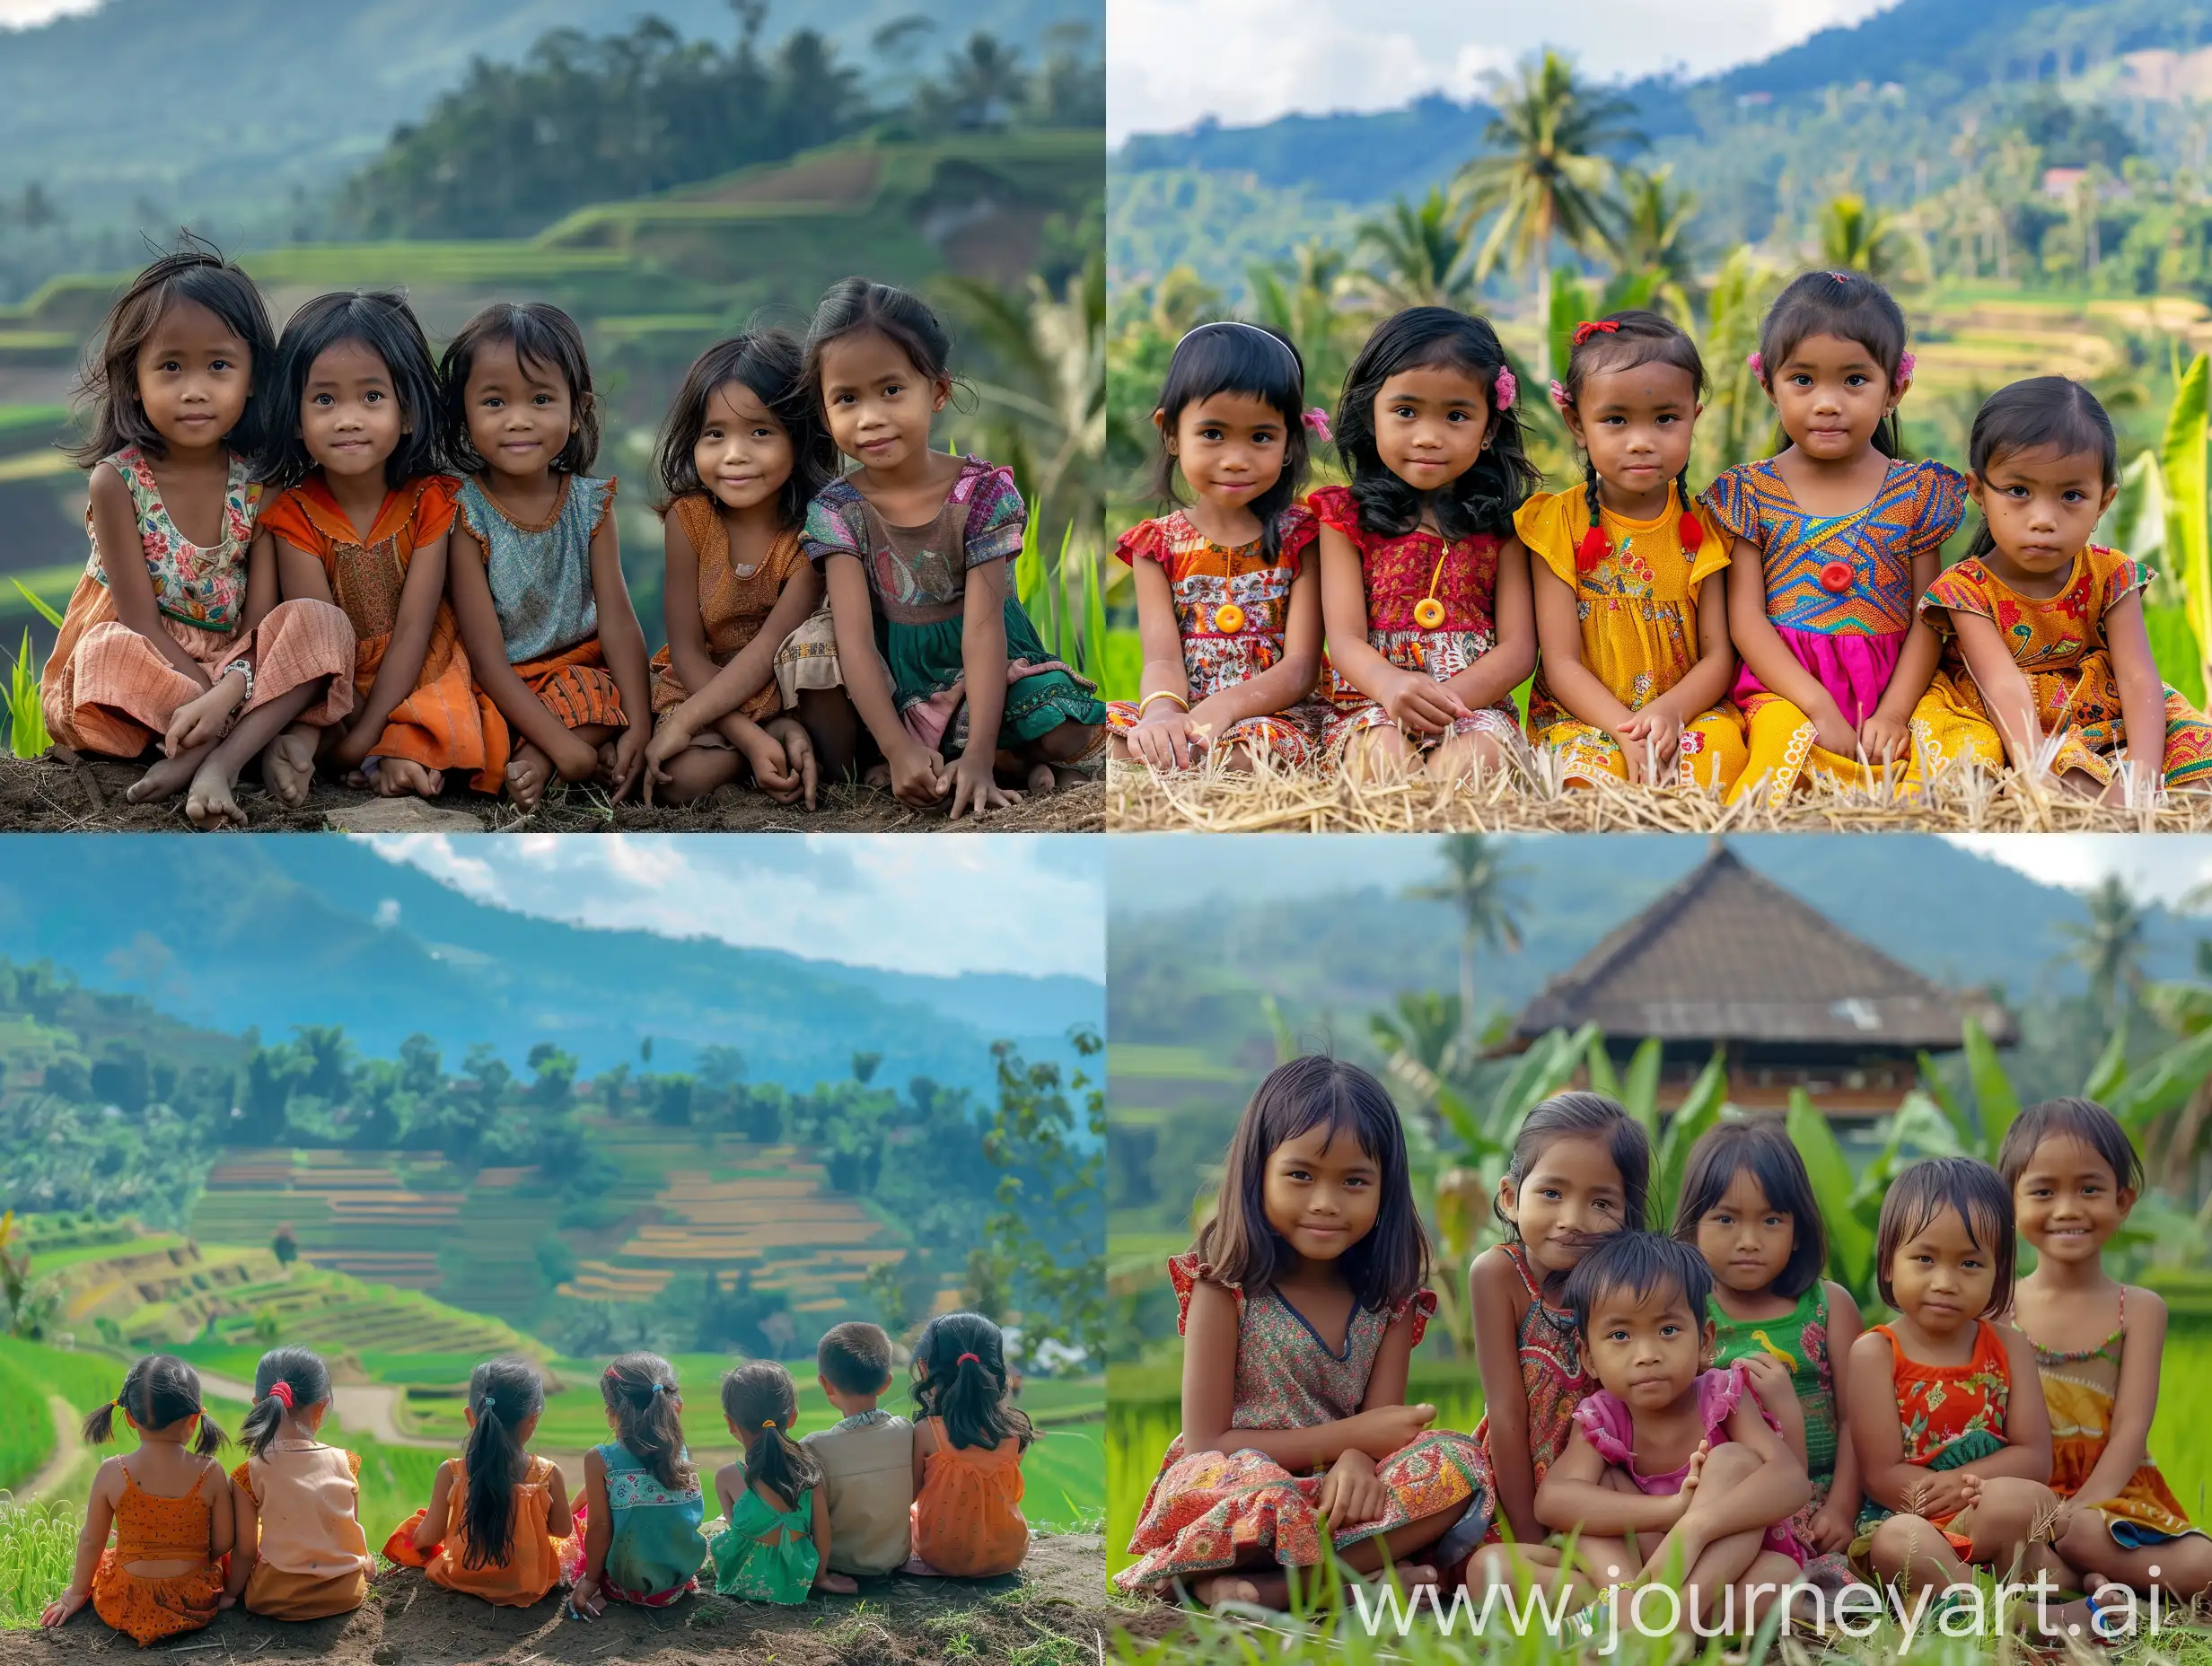 6 enam gadis desa cantik indonesia cilik berusia 7 tahun. Mereka berenam sedang duduk rapih diatas bukit. Dibelakangnya ada sawah dangl gunung bukit indah. Leica kamera. 8K HD. sangat detail.